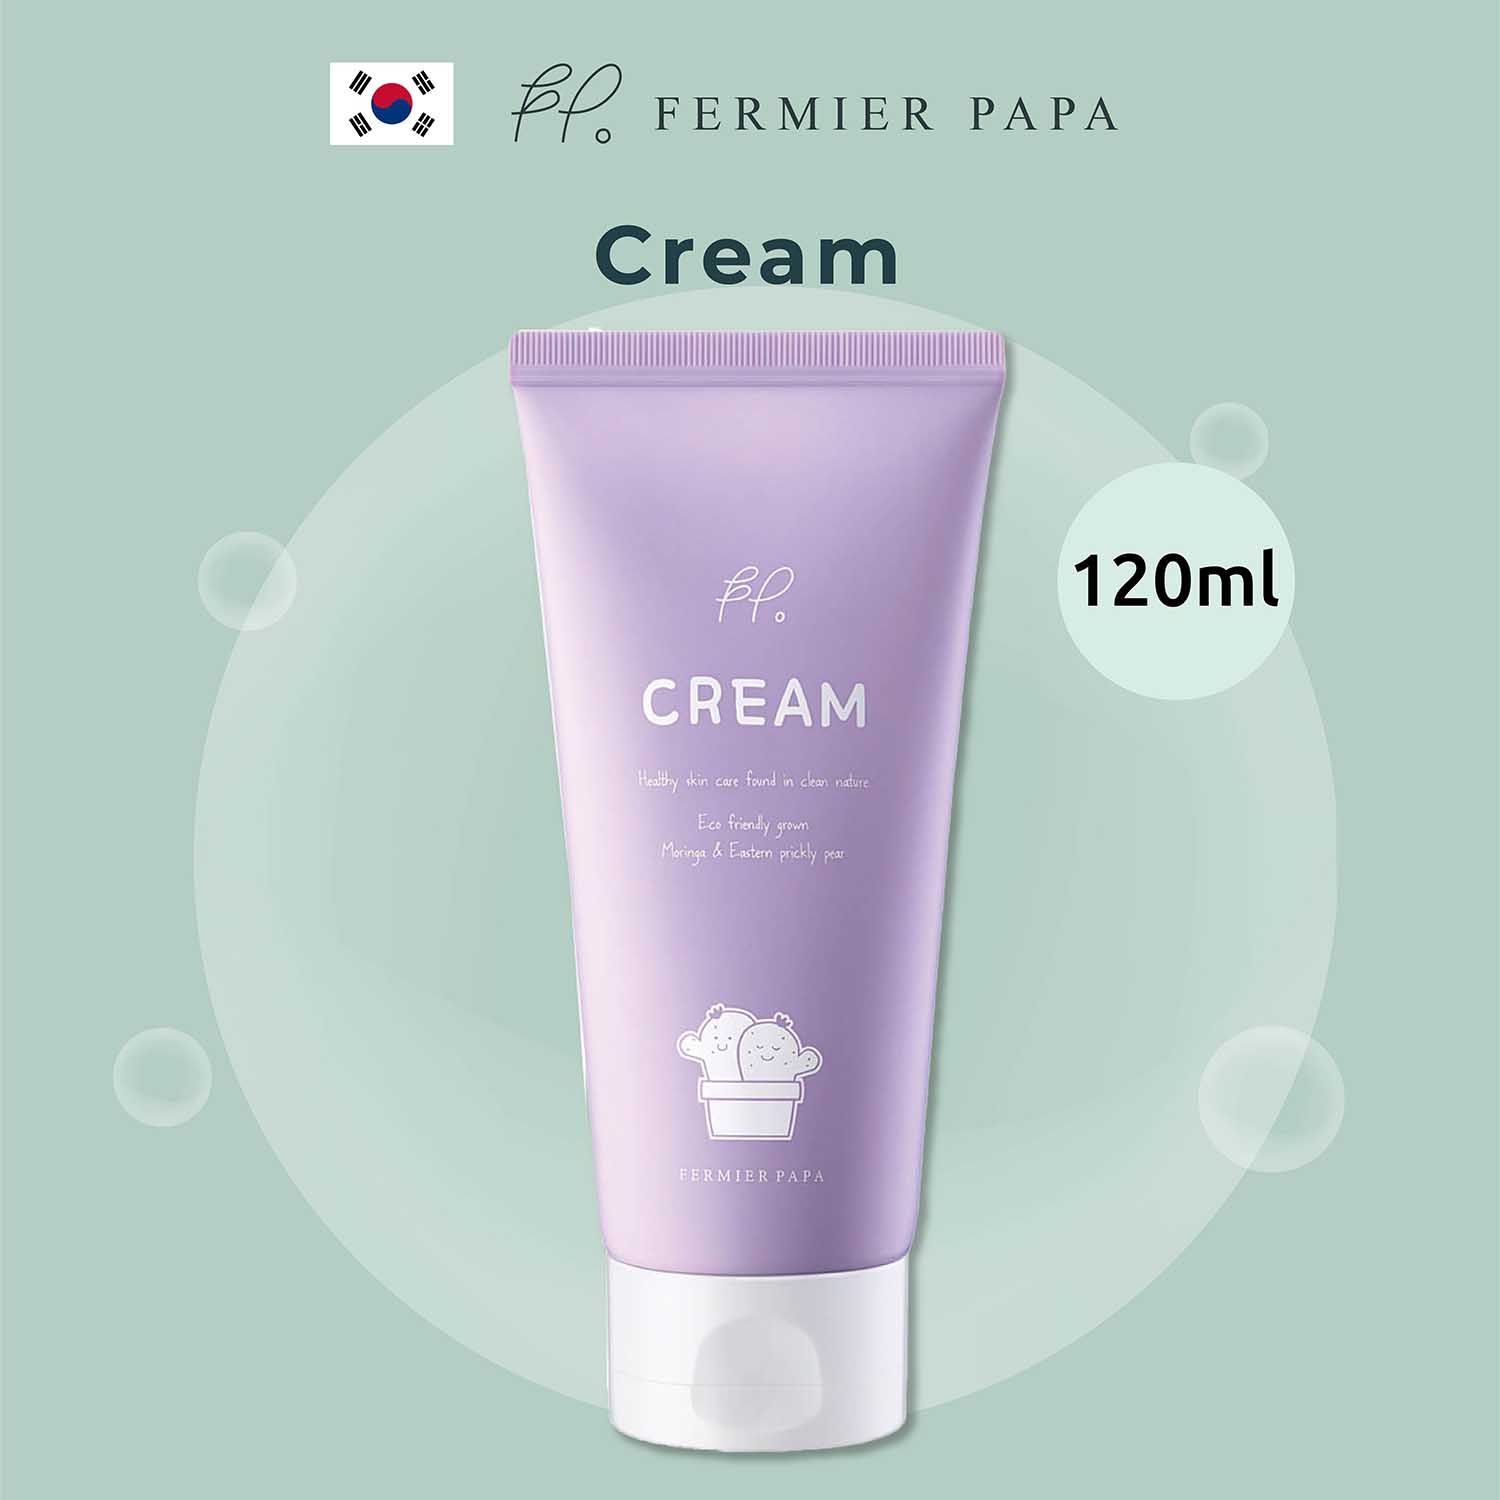 [Daily Healthy] Fermier Papa Cream 120g - NS042 / Baby Healthy Organic Cream